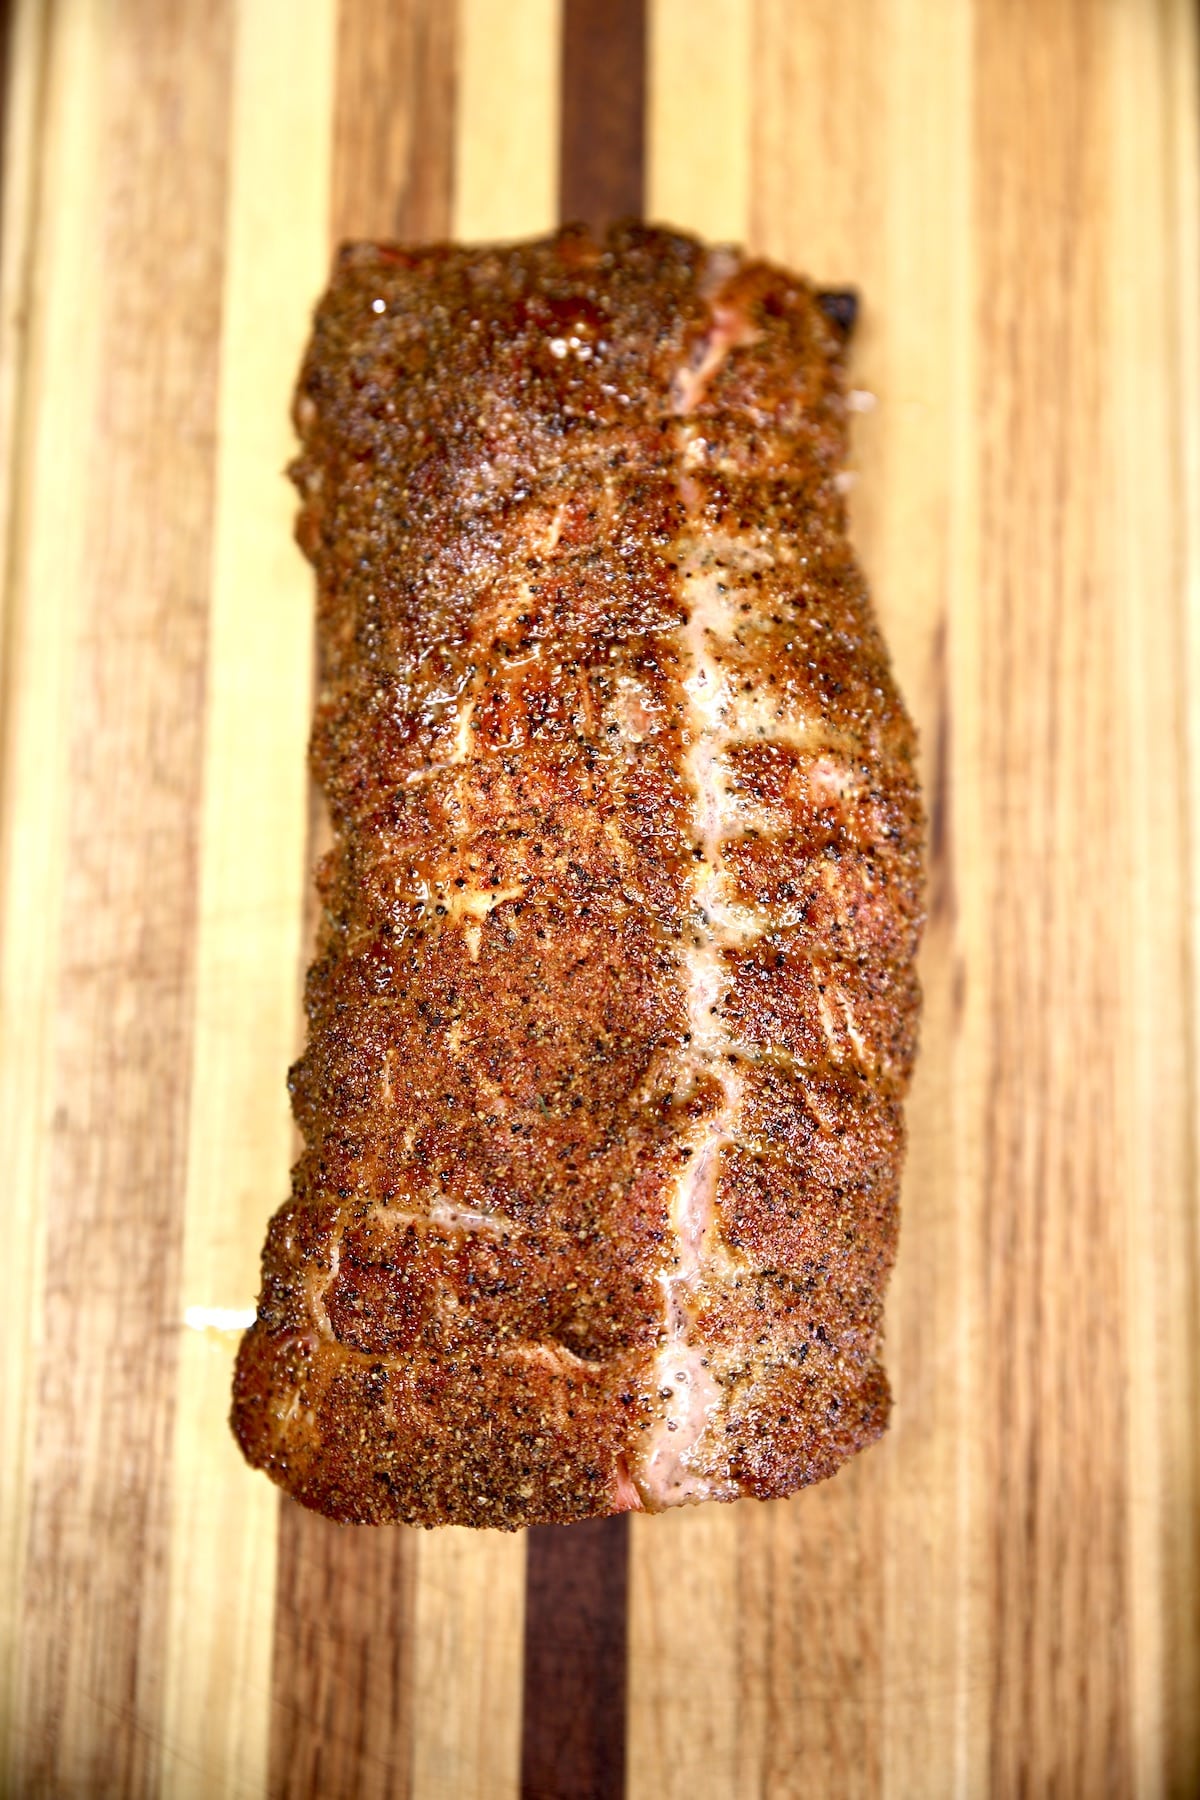 Grilled pork loin resting on a cutting board.